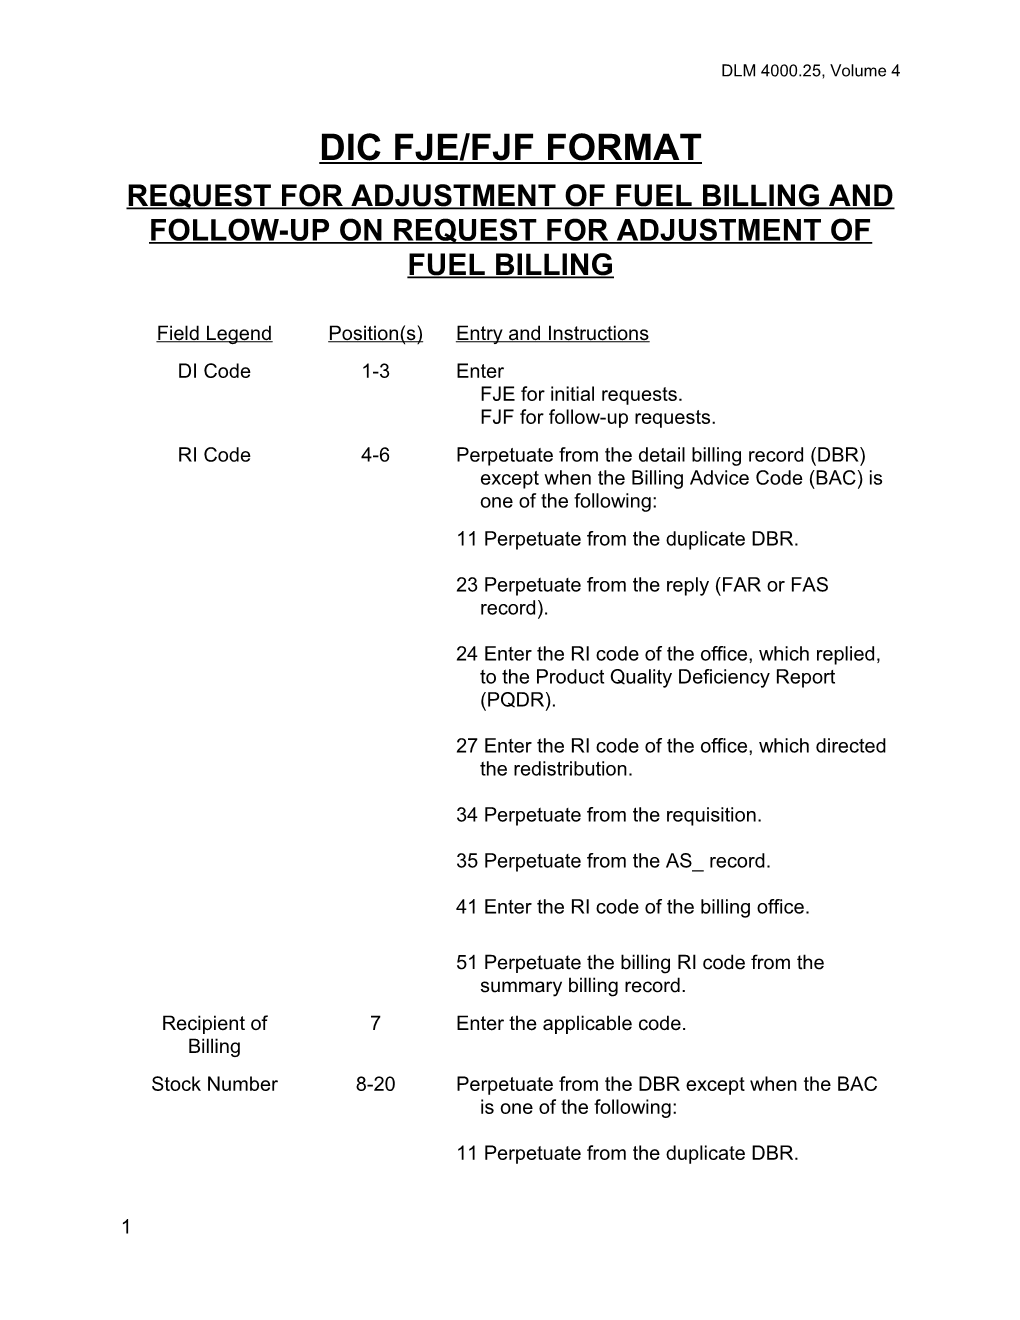 Ap3.15 Request for Adjustment of Fuel Billing